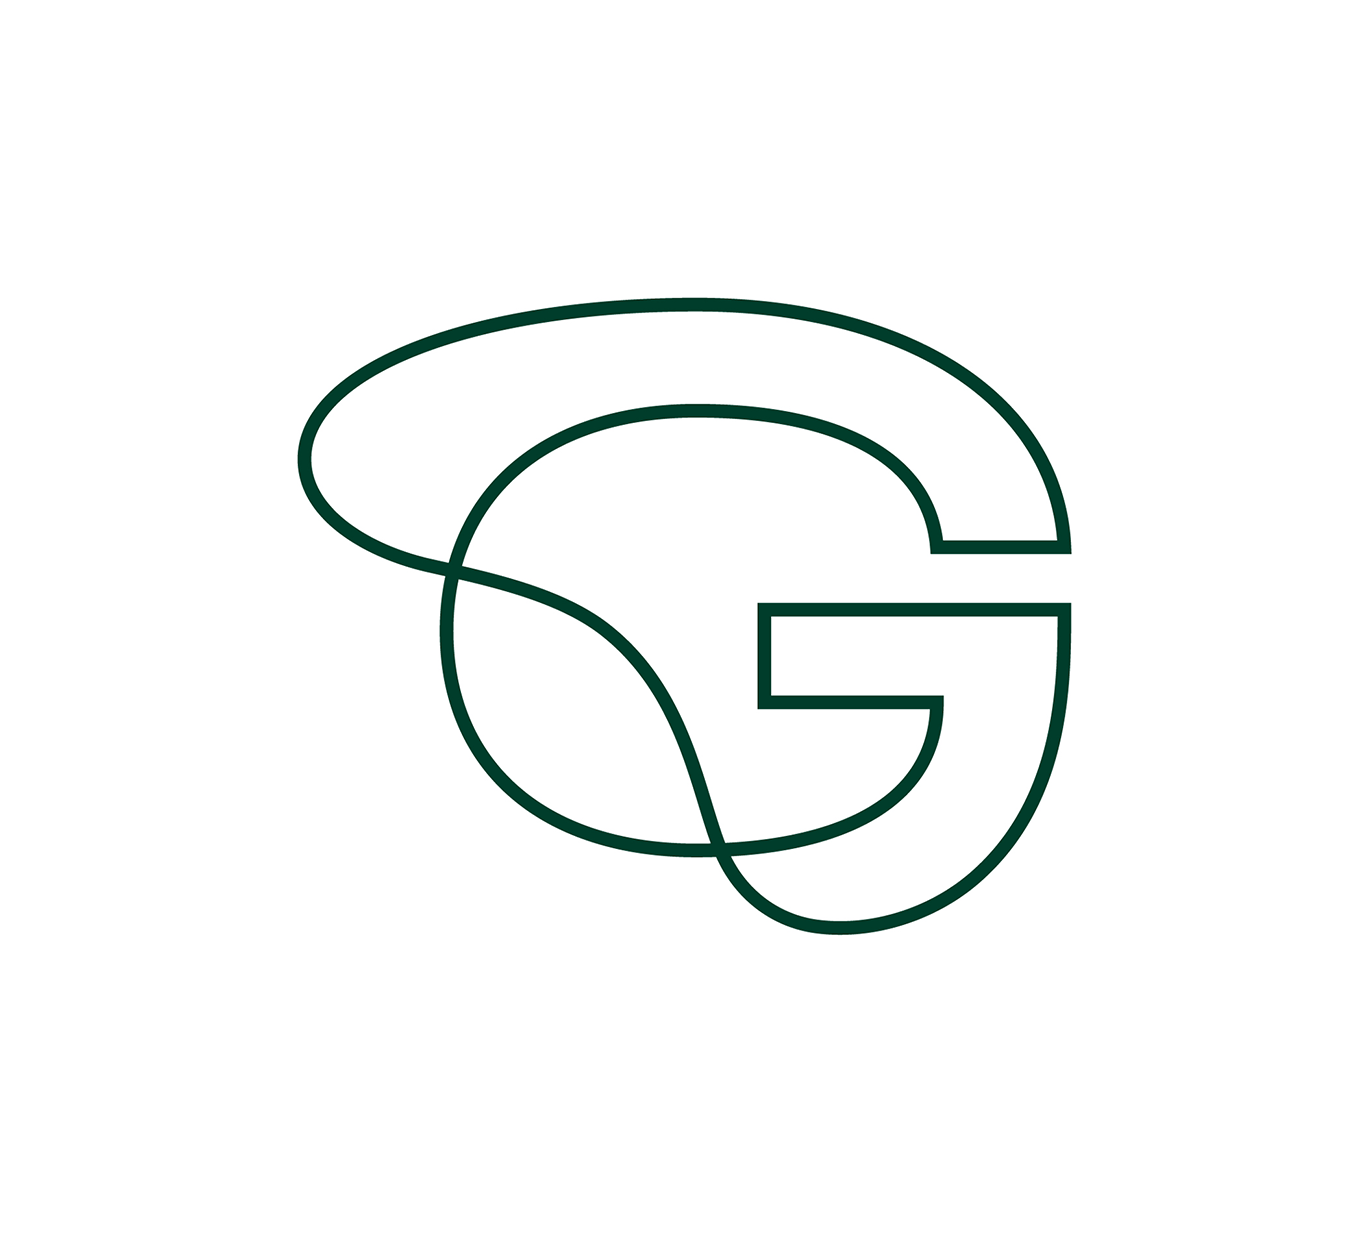 Getsafe数字化保险公司启用全新的品牌VI设计系统-深圳VI设计1